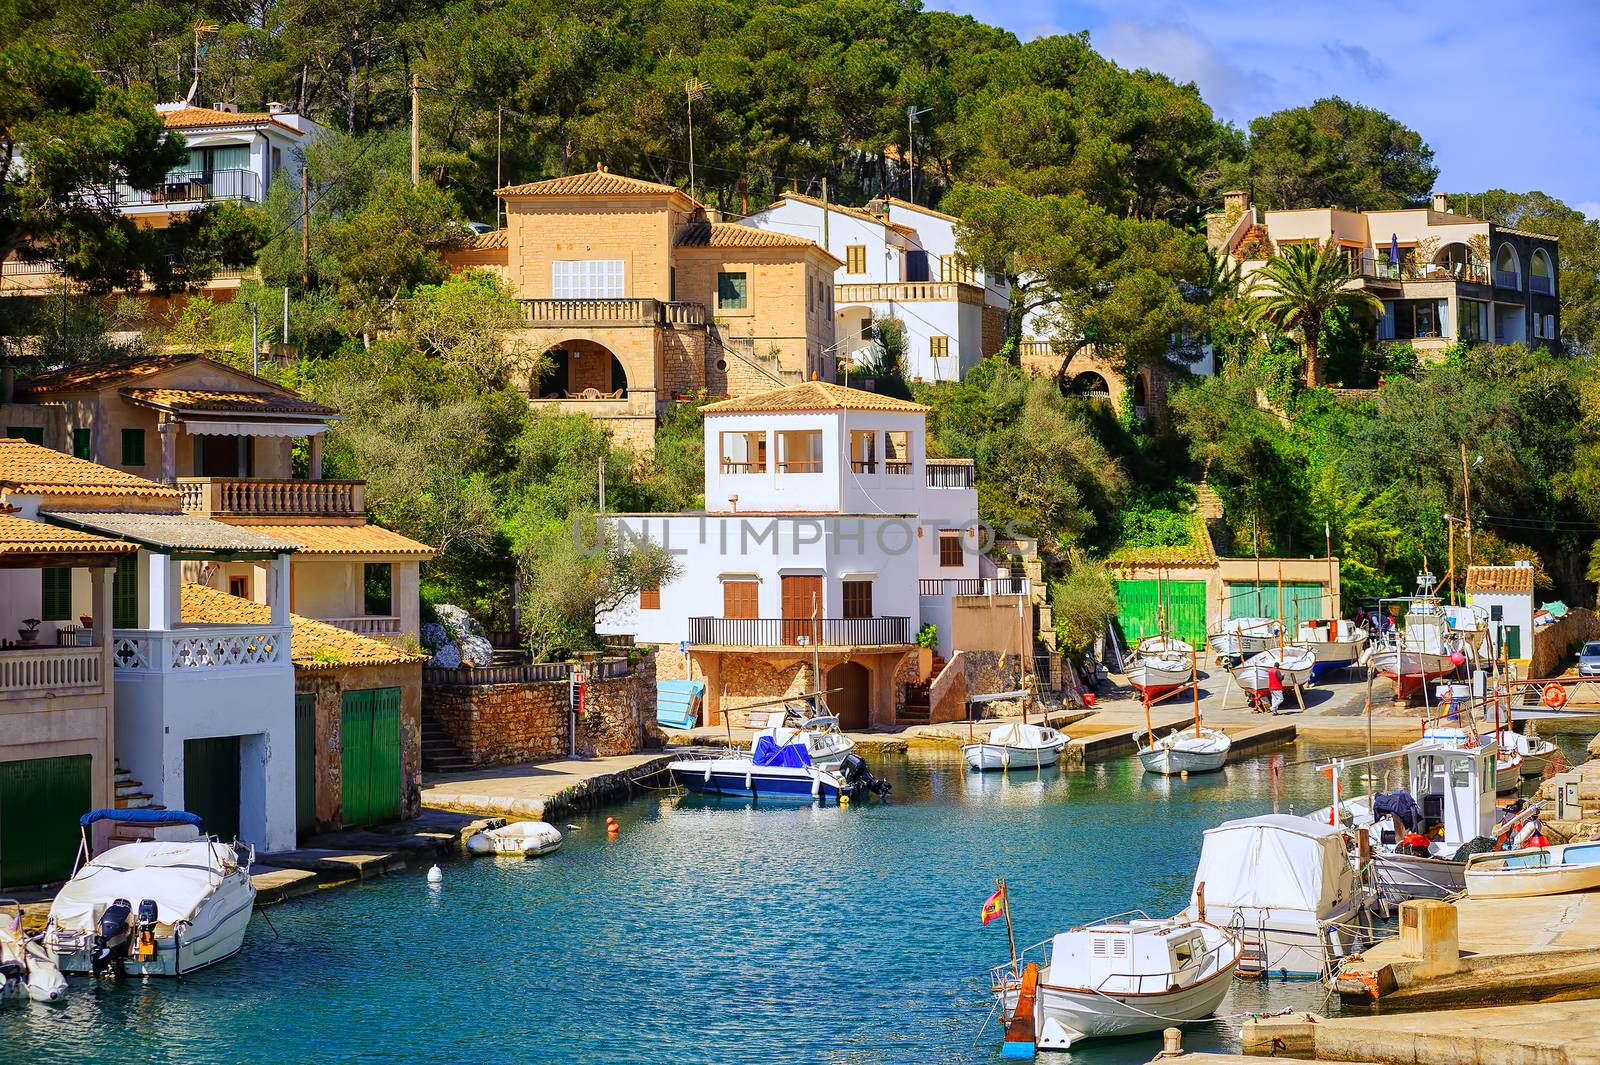 Little fishermen town on Mallorca island in Mediterranean sea, Spain by GlobePhotos